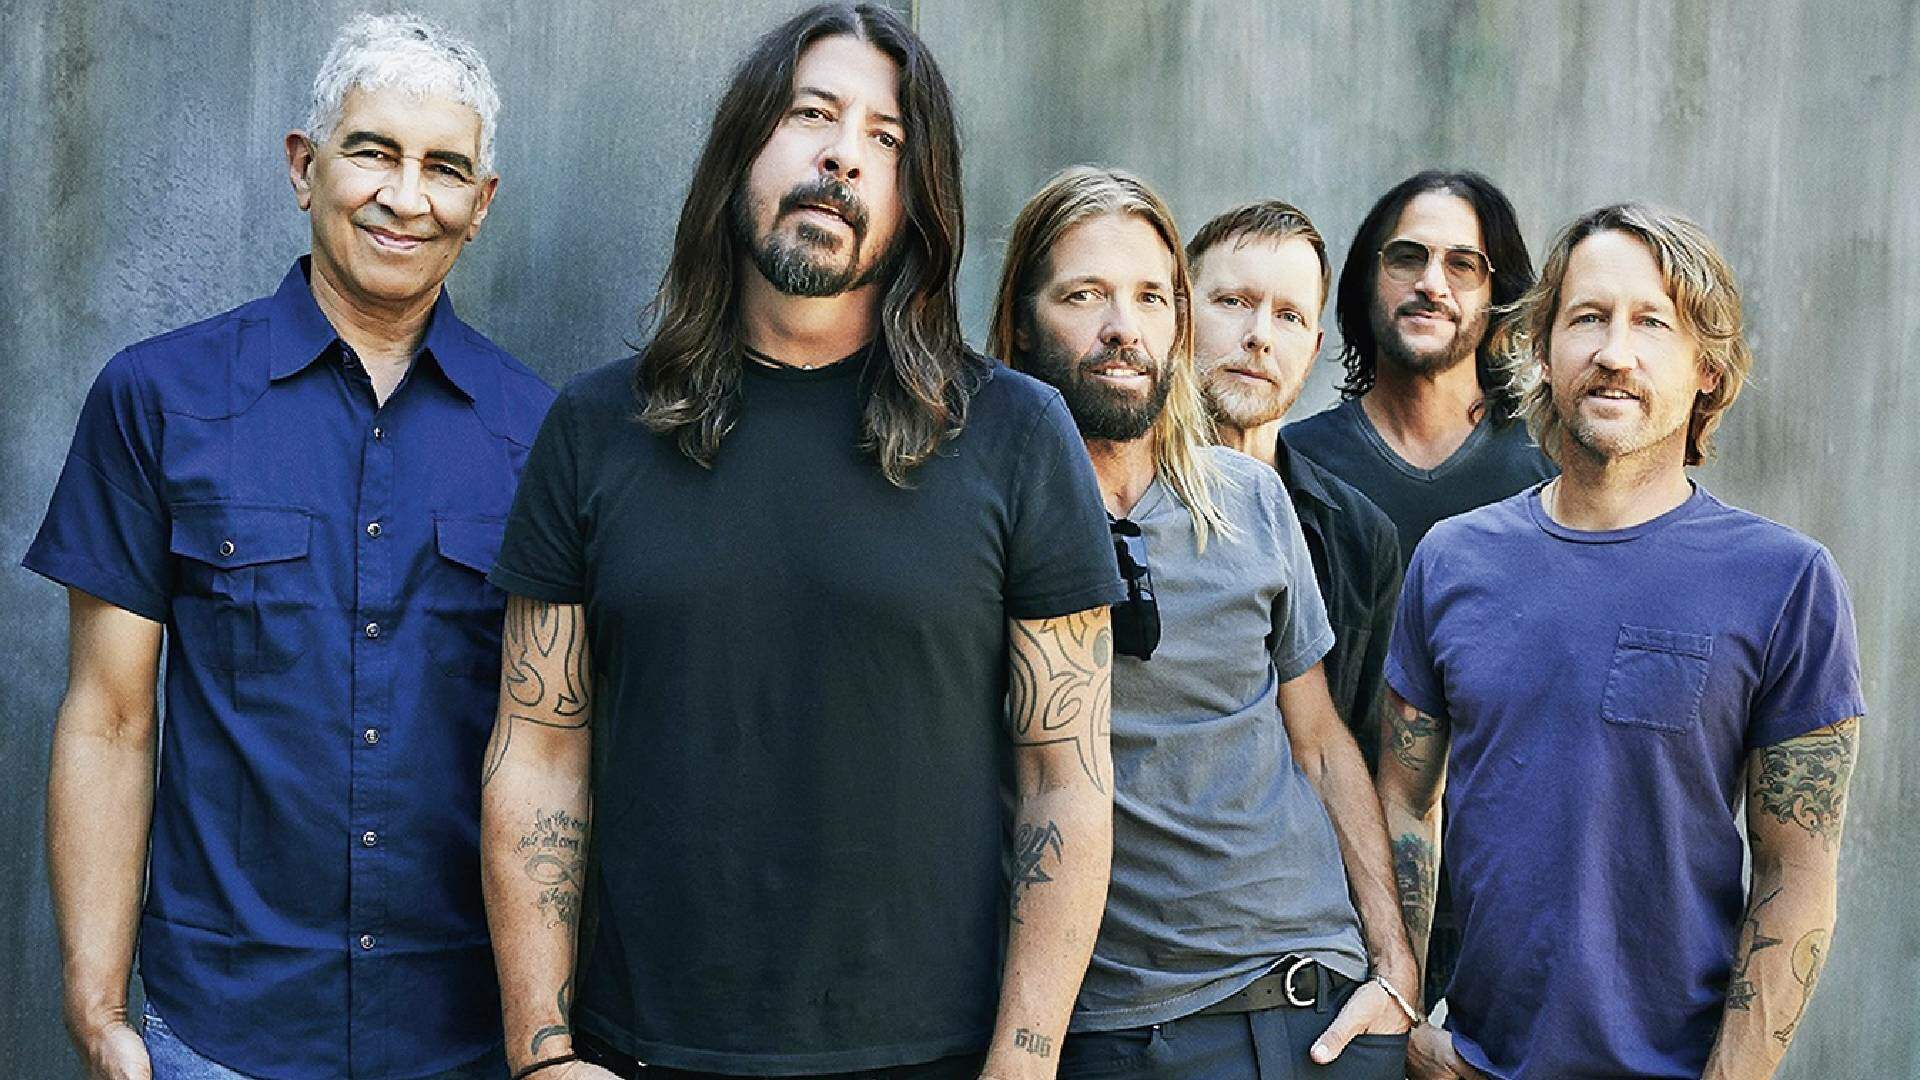 Após morte do baterista Taylor Hawkins, Foo Fighters anuncia surpresa aos fãs: “para vocês” - Metropolitana FM